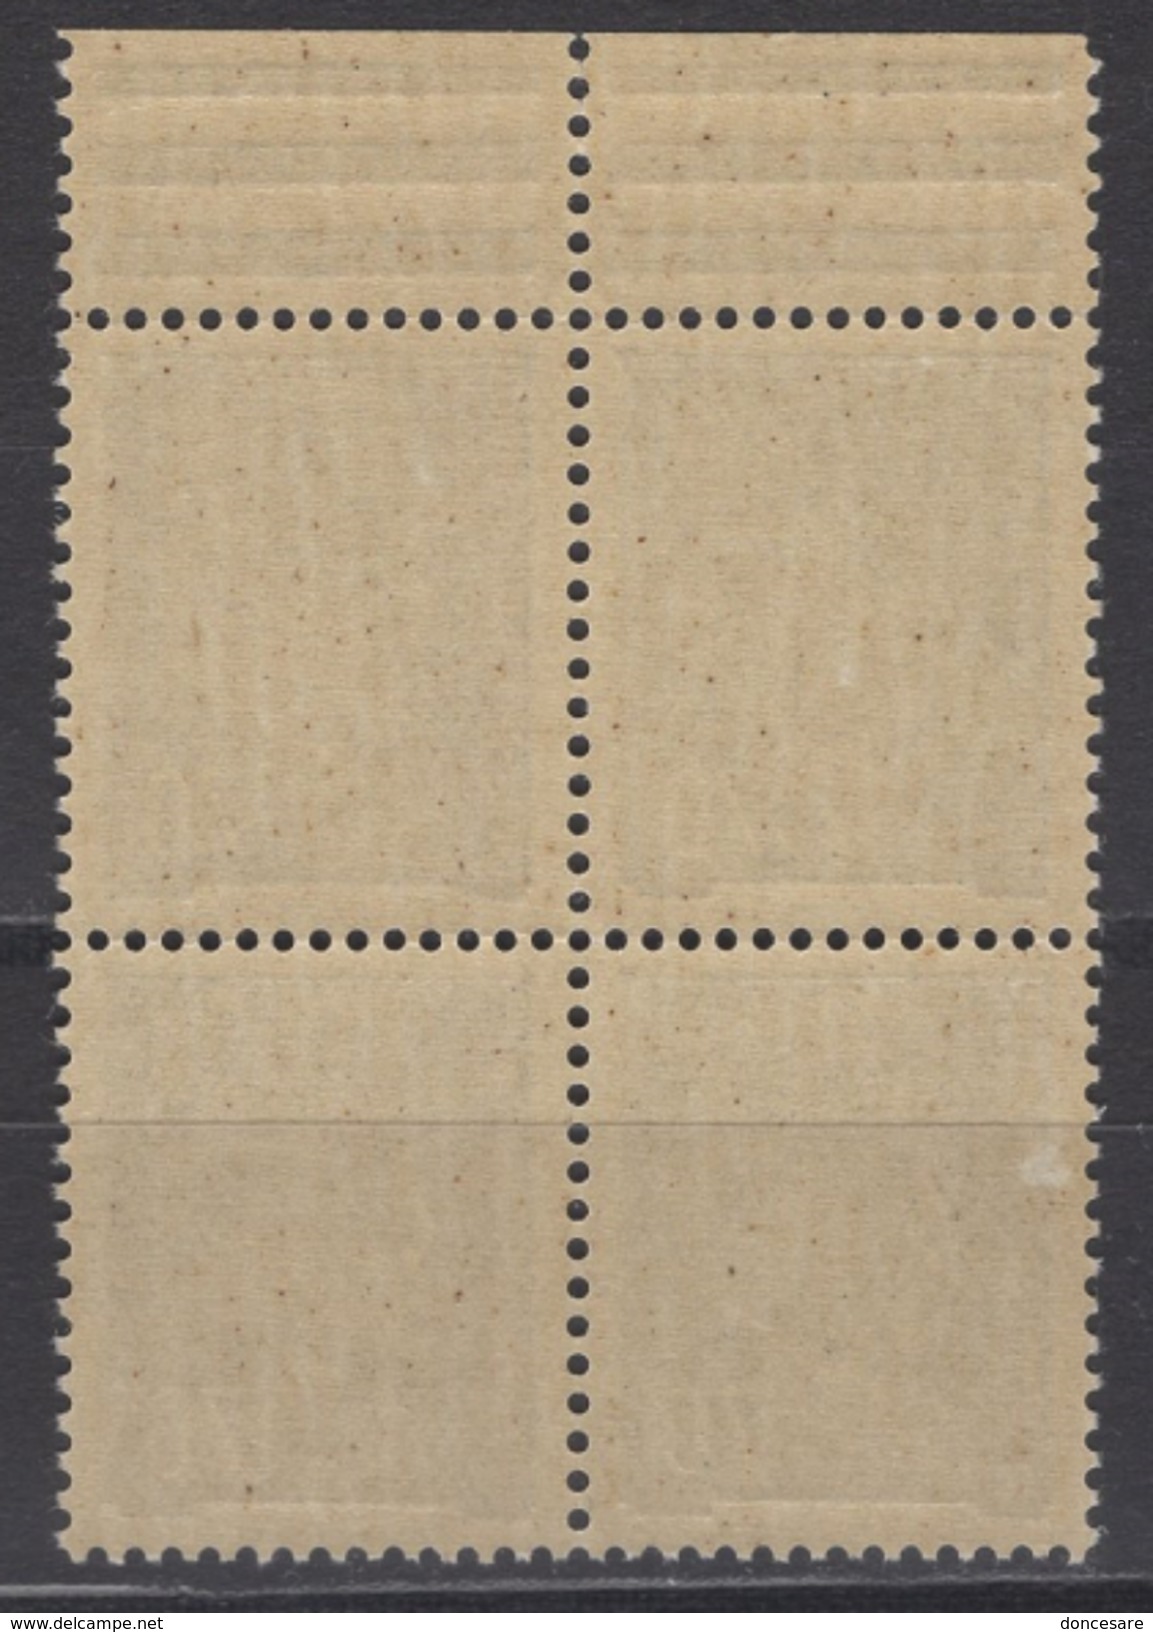 FRANCE 1941 - BLOC DE 4 TP Y.T. N° 510 - NEUFS** /W44 - Unused Stamps